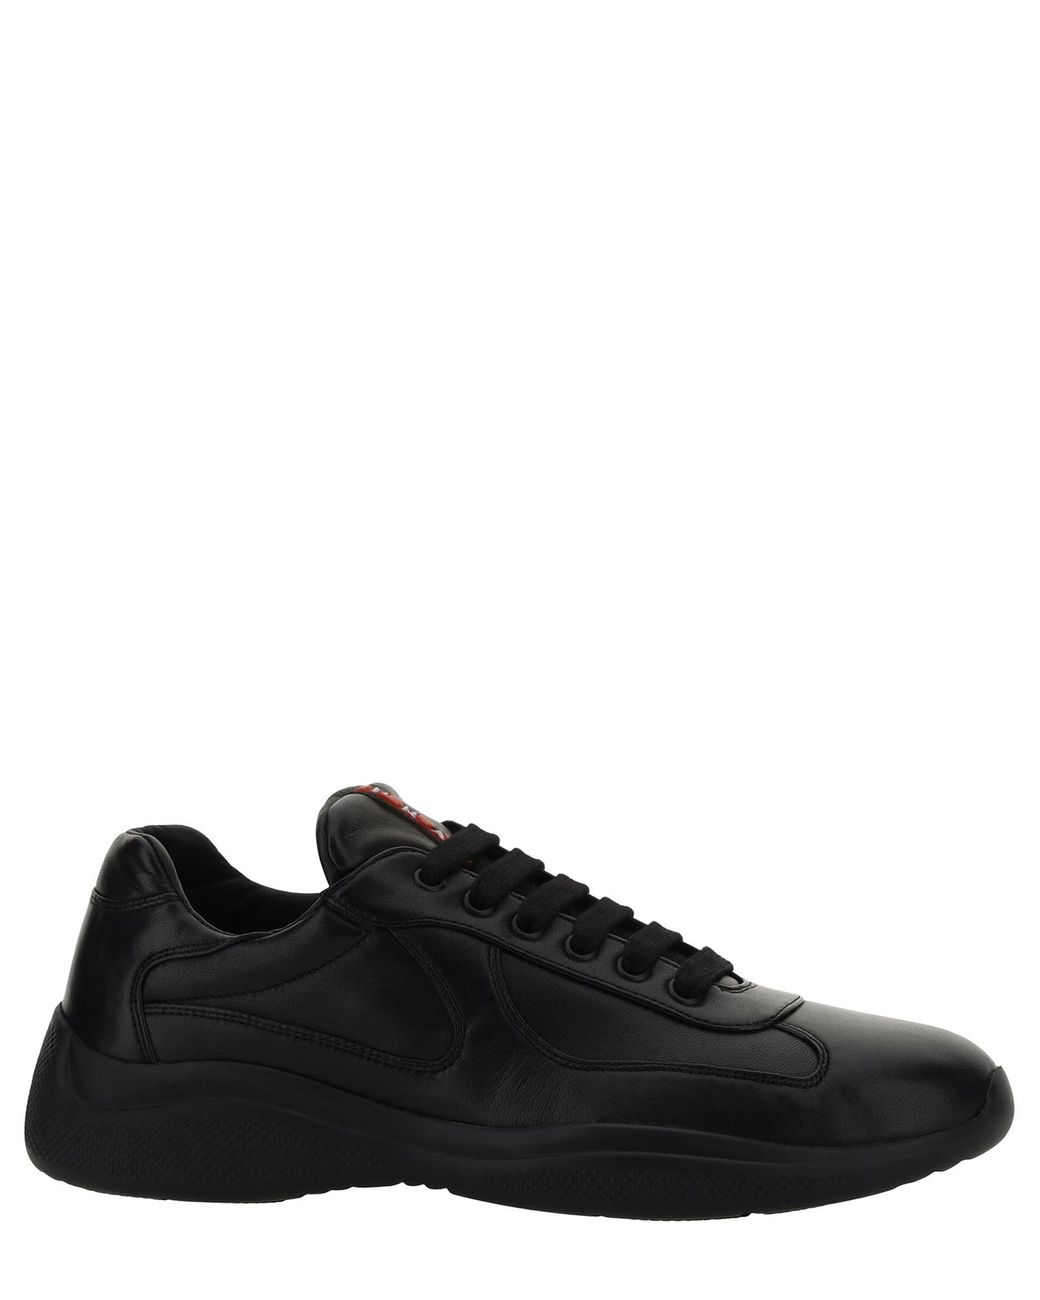 Prada Black Shoes on Sale | website.jkuat.ac.ke